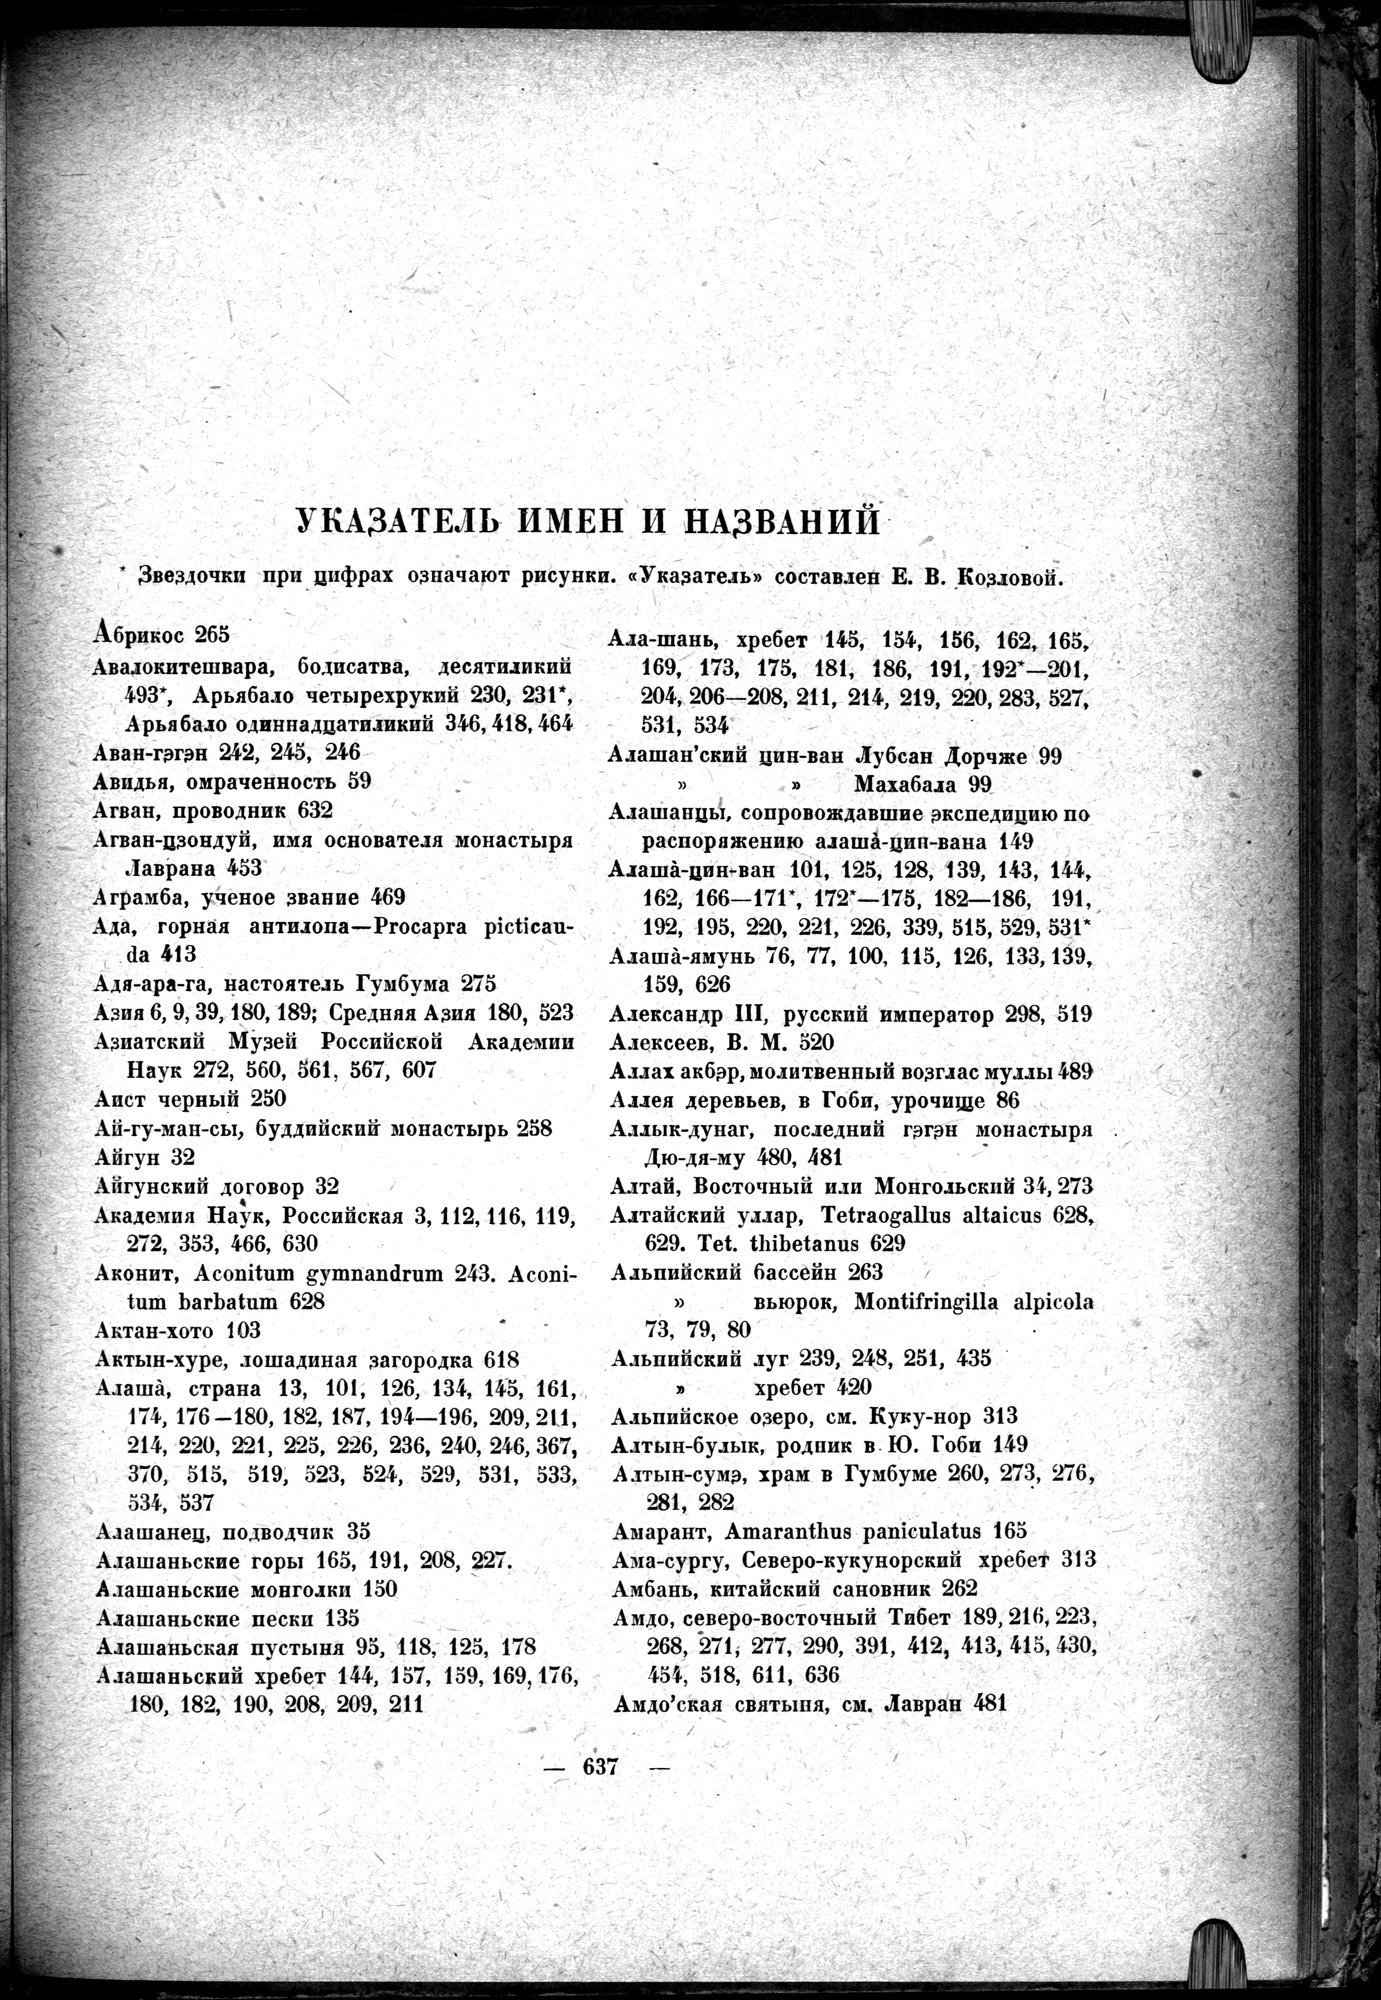 Mongoliya i Amdo i mertby gorod Khara-Khoto : vol.1 / Page 727 (Grayscale High Resolution Image)